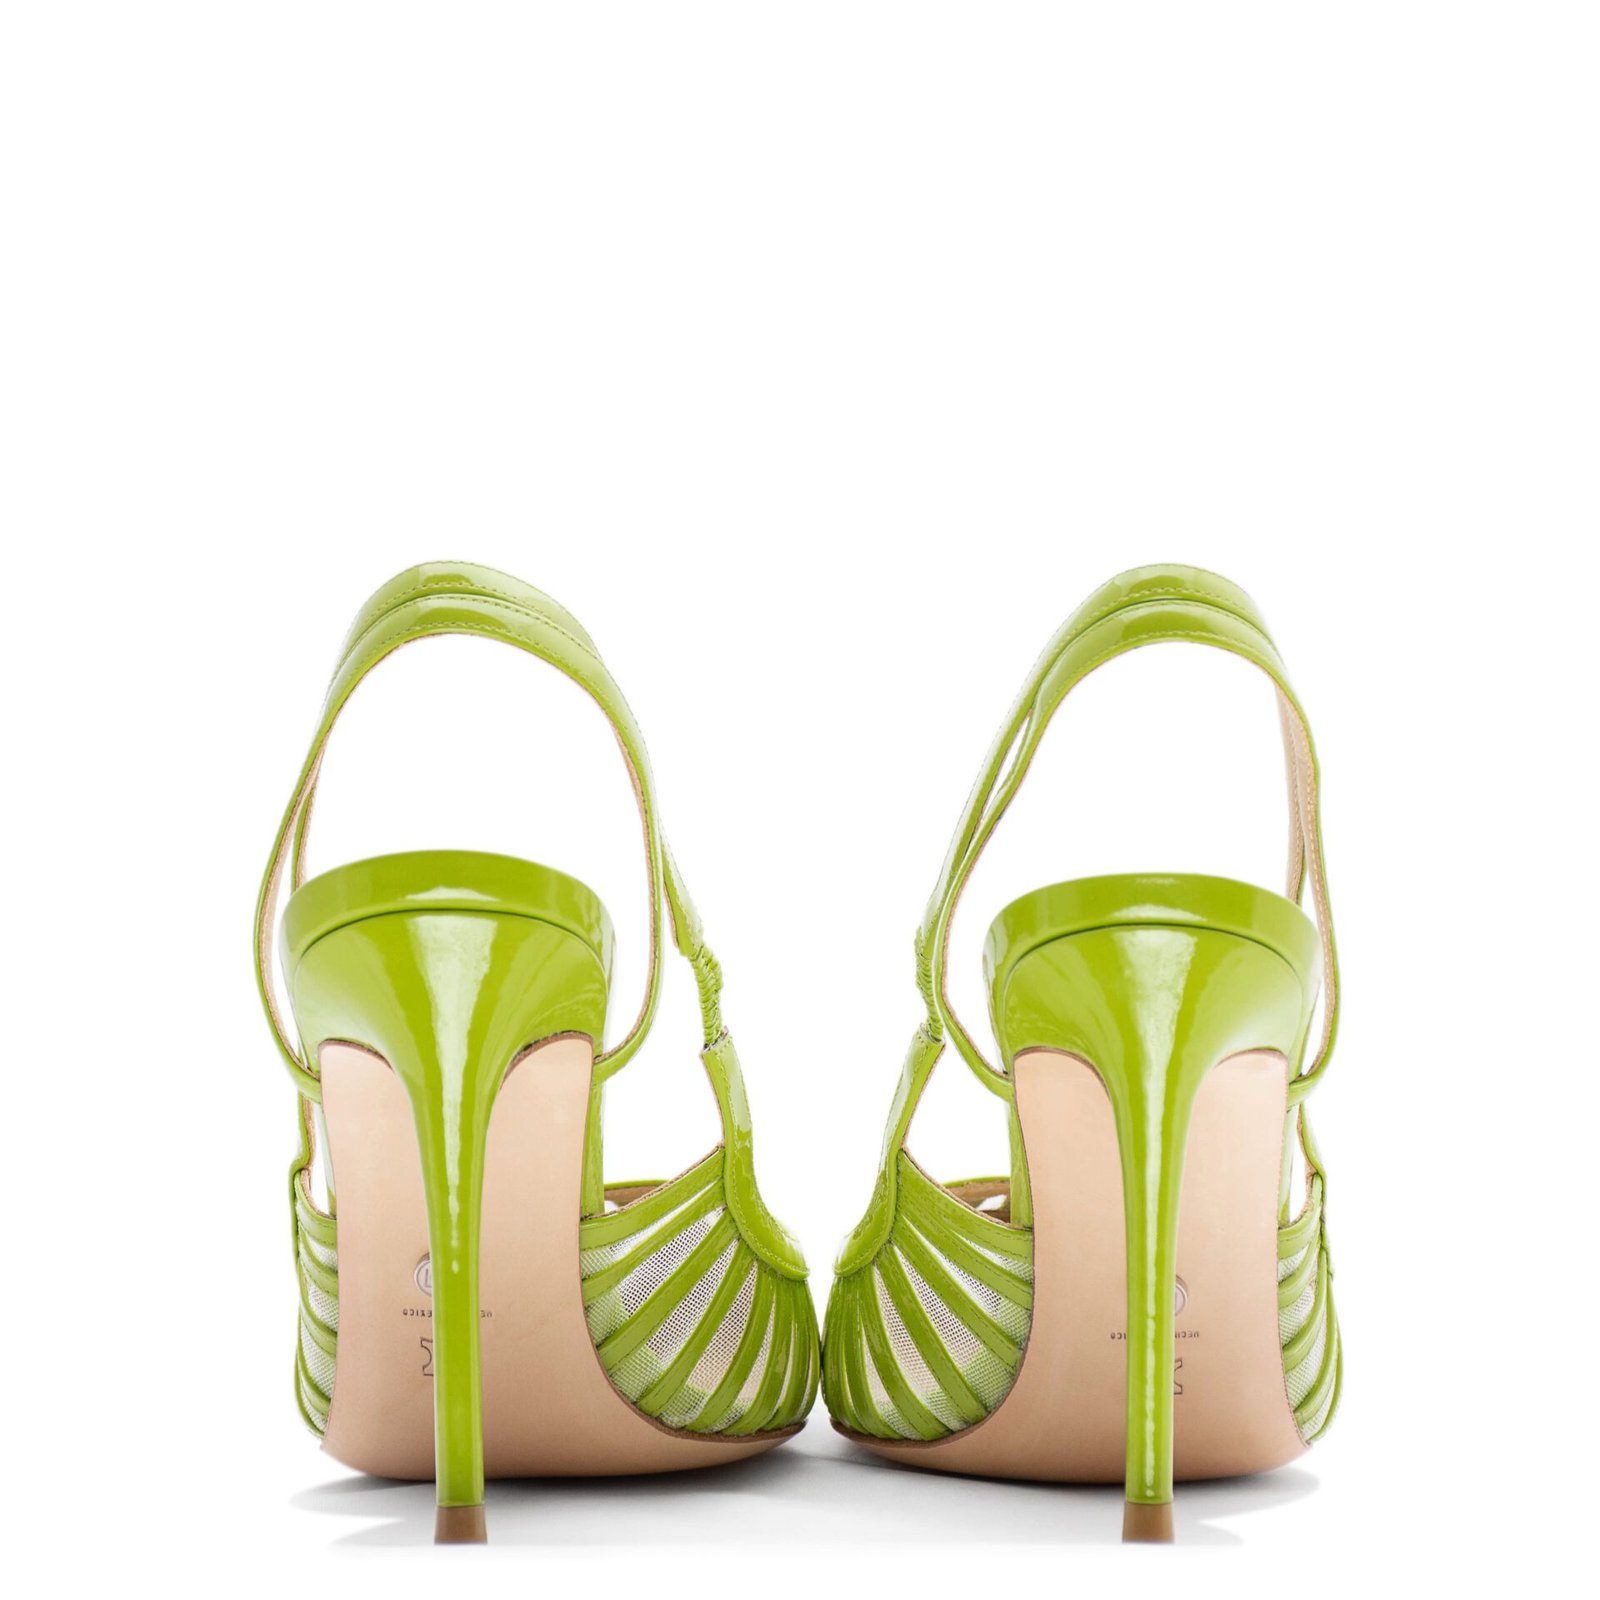 Green slingback high heels in men's sizes